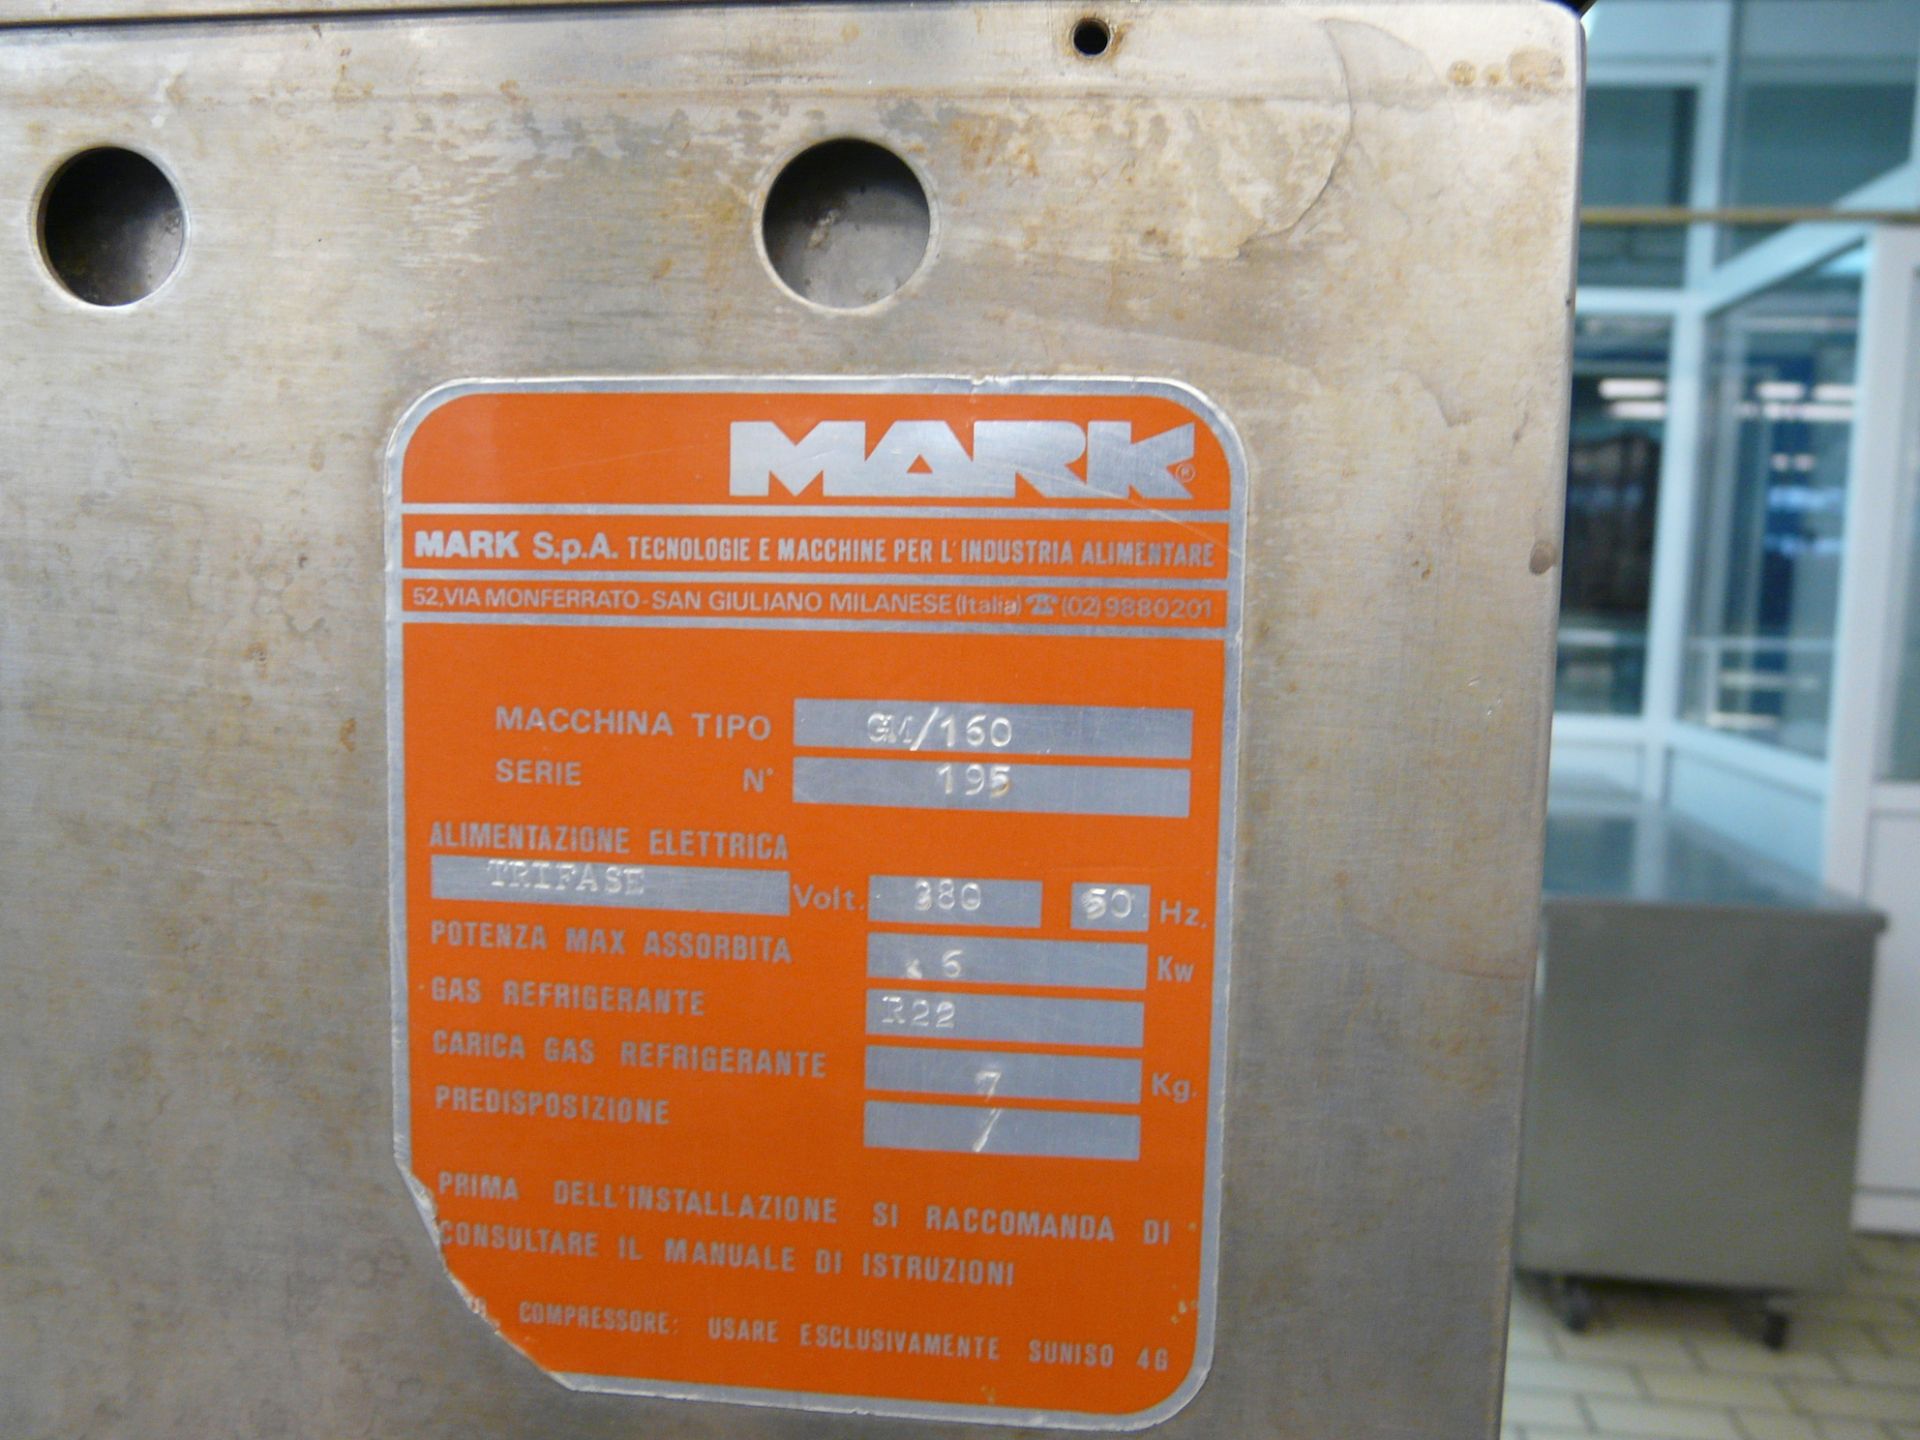 English: MARK,GELMARK 160 Continuous Ice Cream Freezer,160 Ltr/Hr,Y.O.M 1985, Refrigerant Liquid R22 - Image 9 of 10